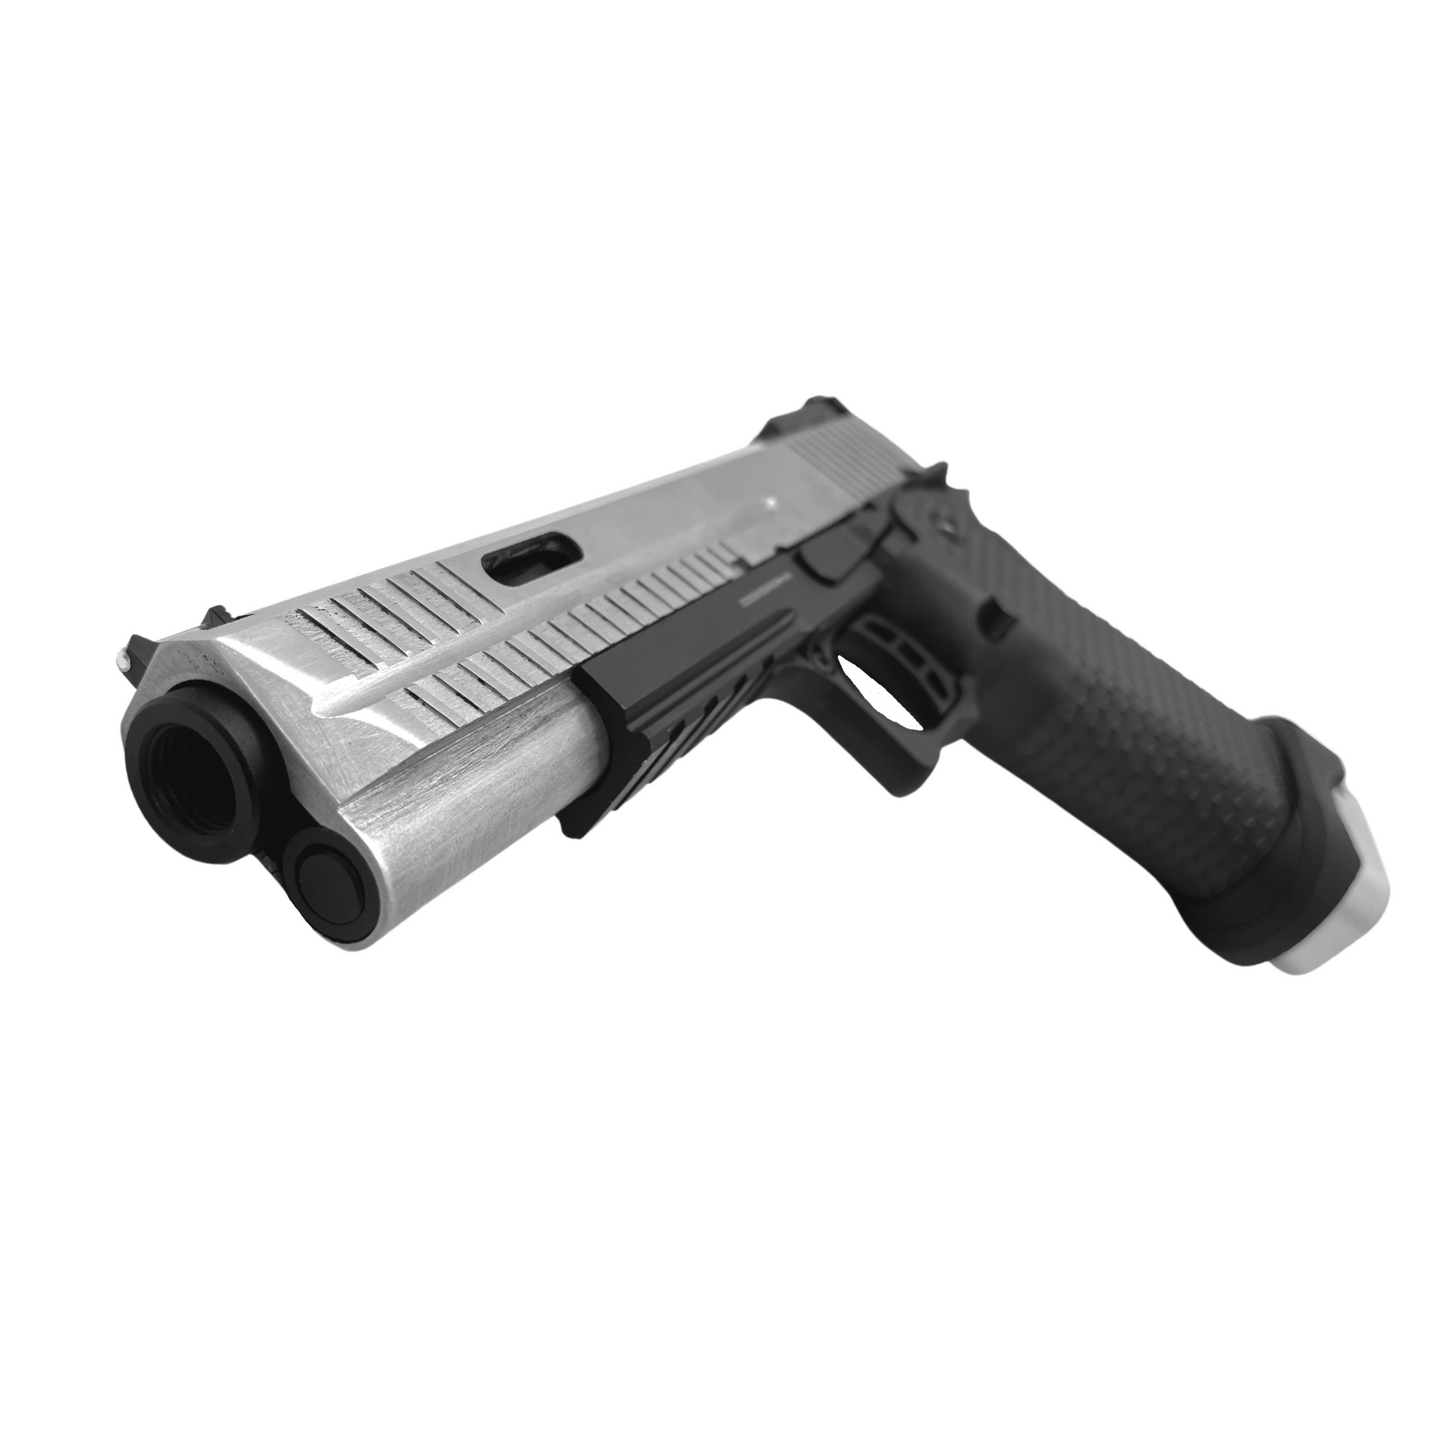 Custom Polished G/E 5.1 Hi-Capa Gas Pistol - Gel Blaster